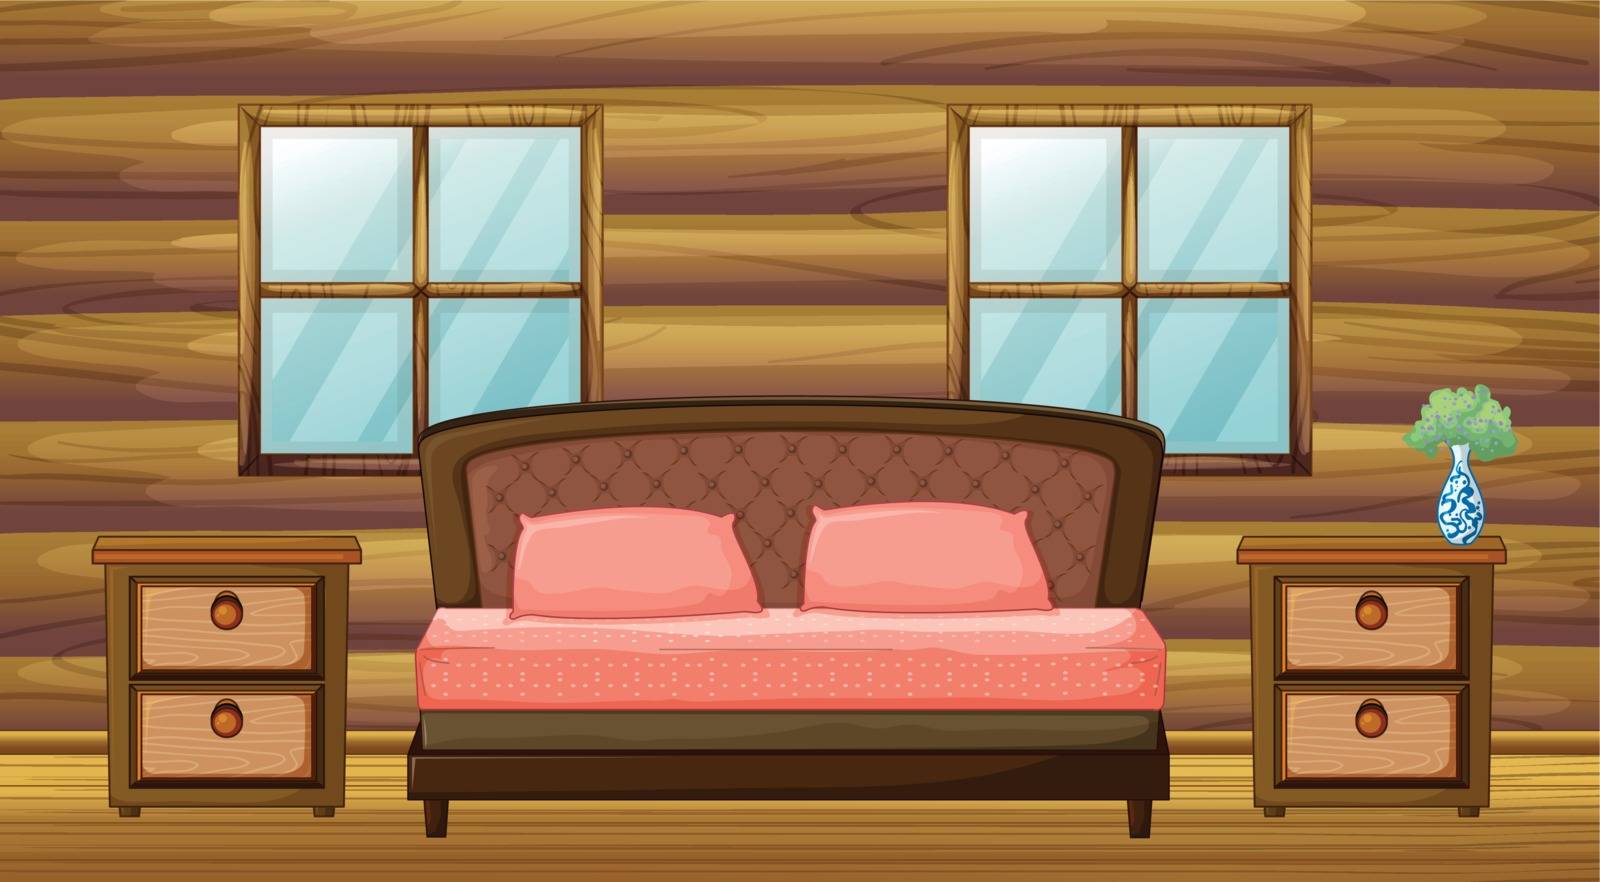 Illustration of an organized bedroom